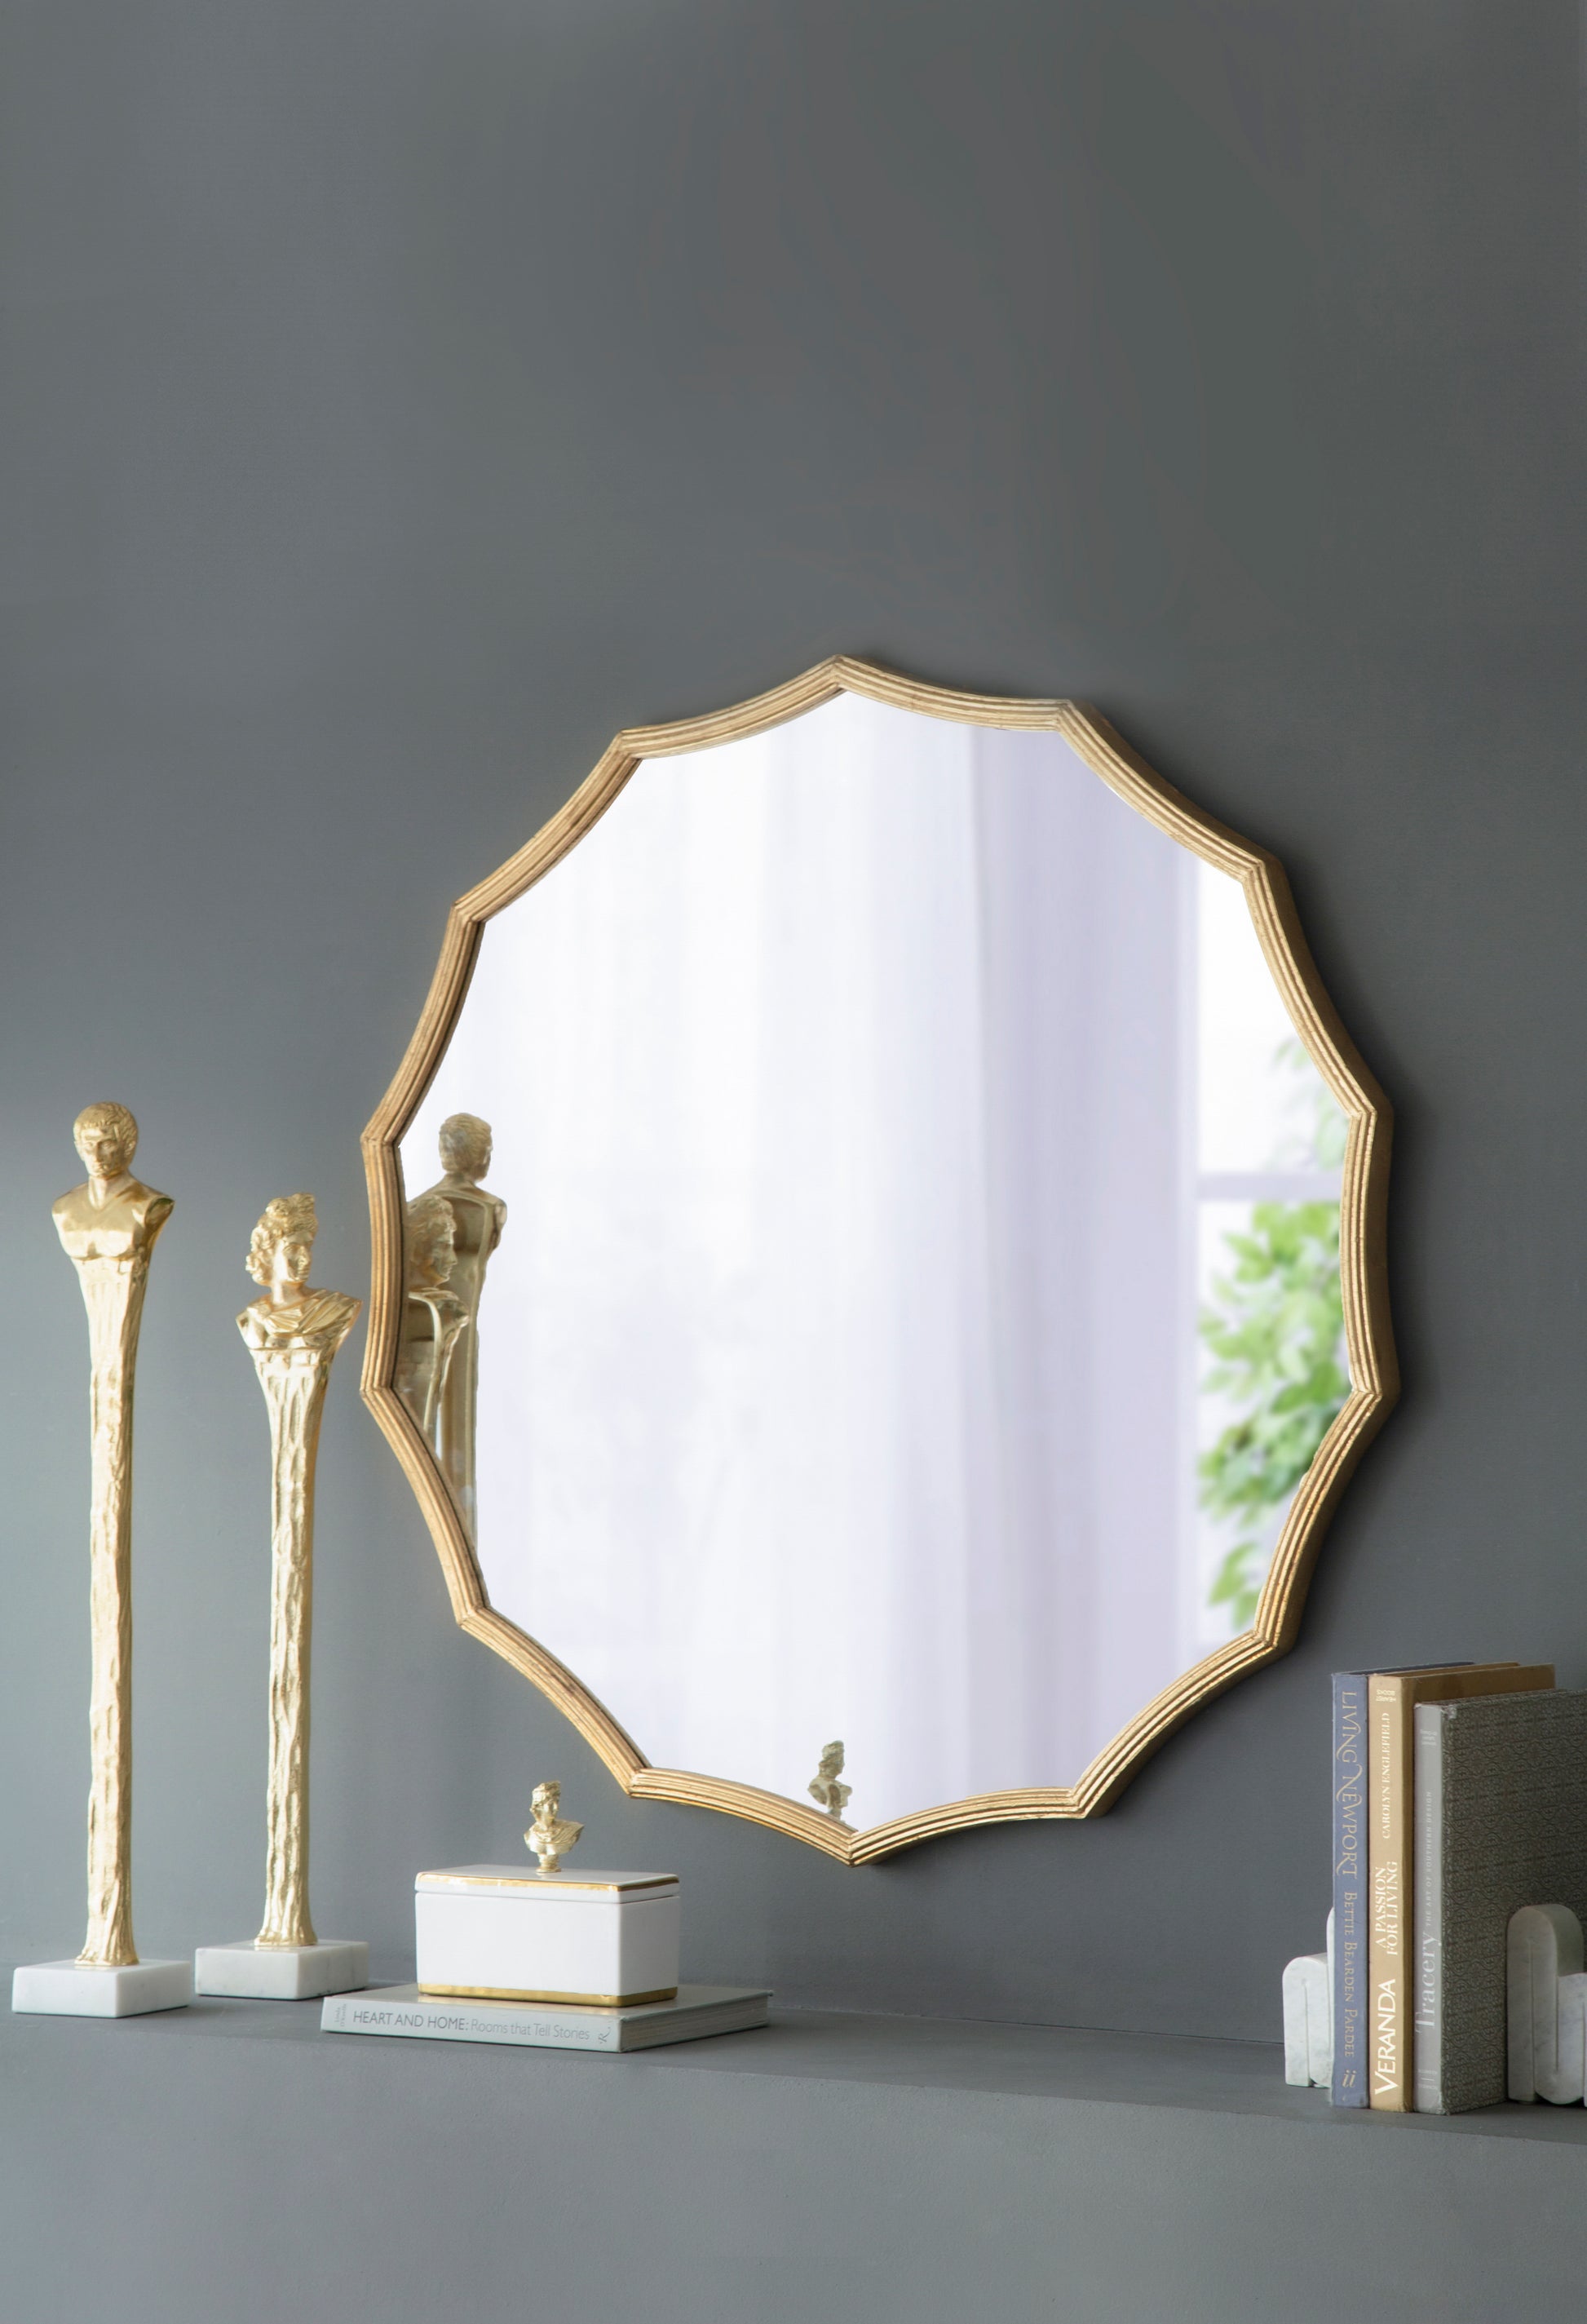 D40" Round Sunburst Wall Mirror with Gold Finish,